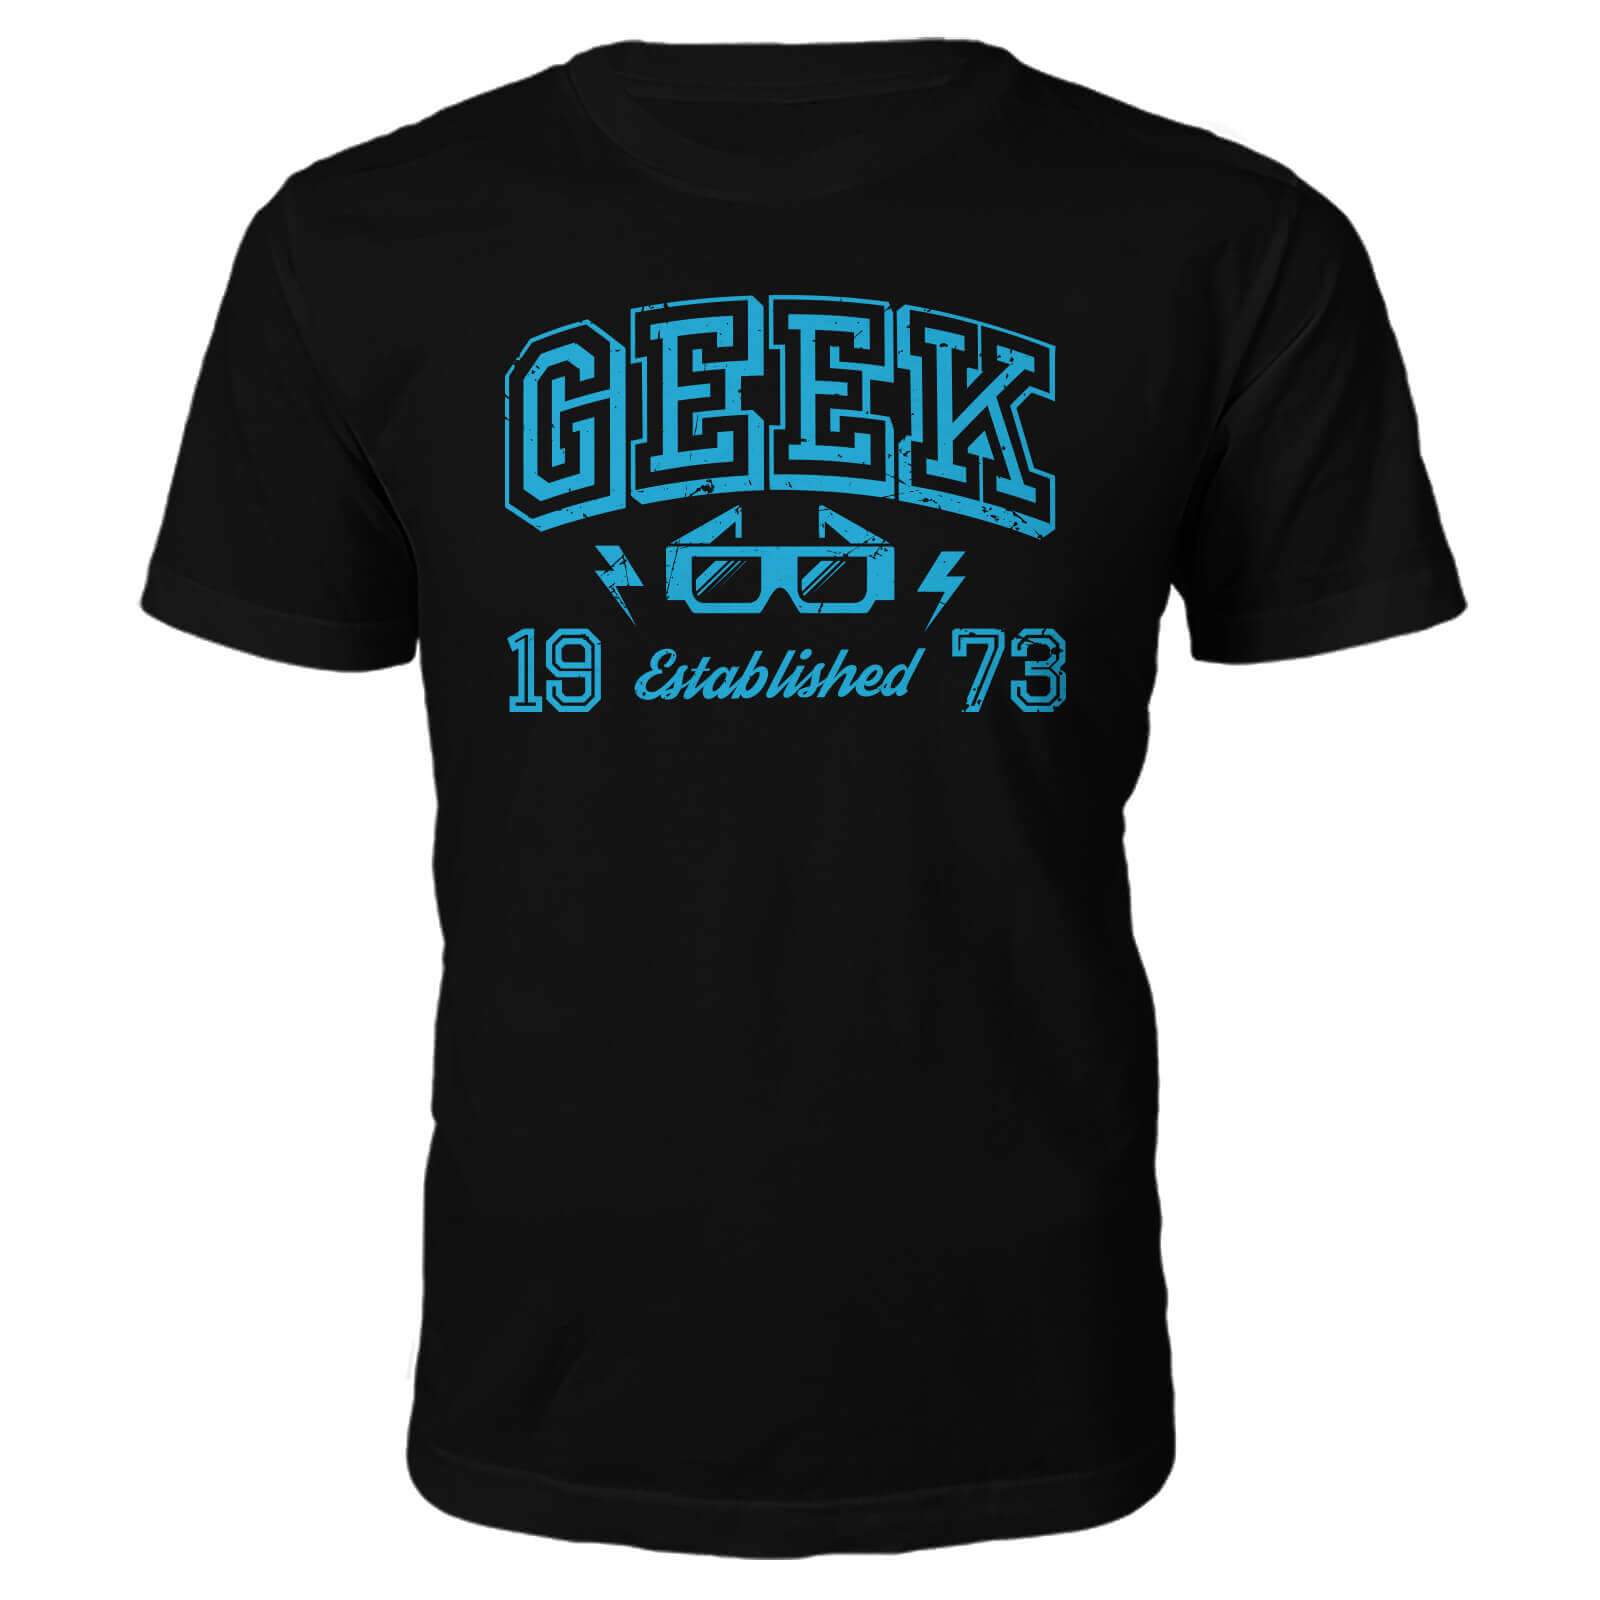 Geek Established 1970's T-Shirt- Black - XXL - 1973